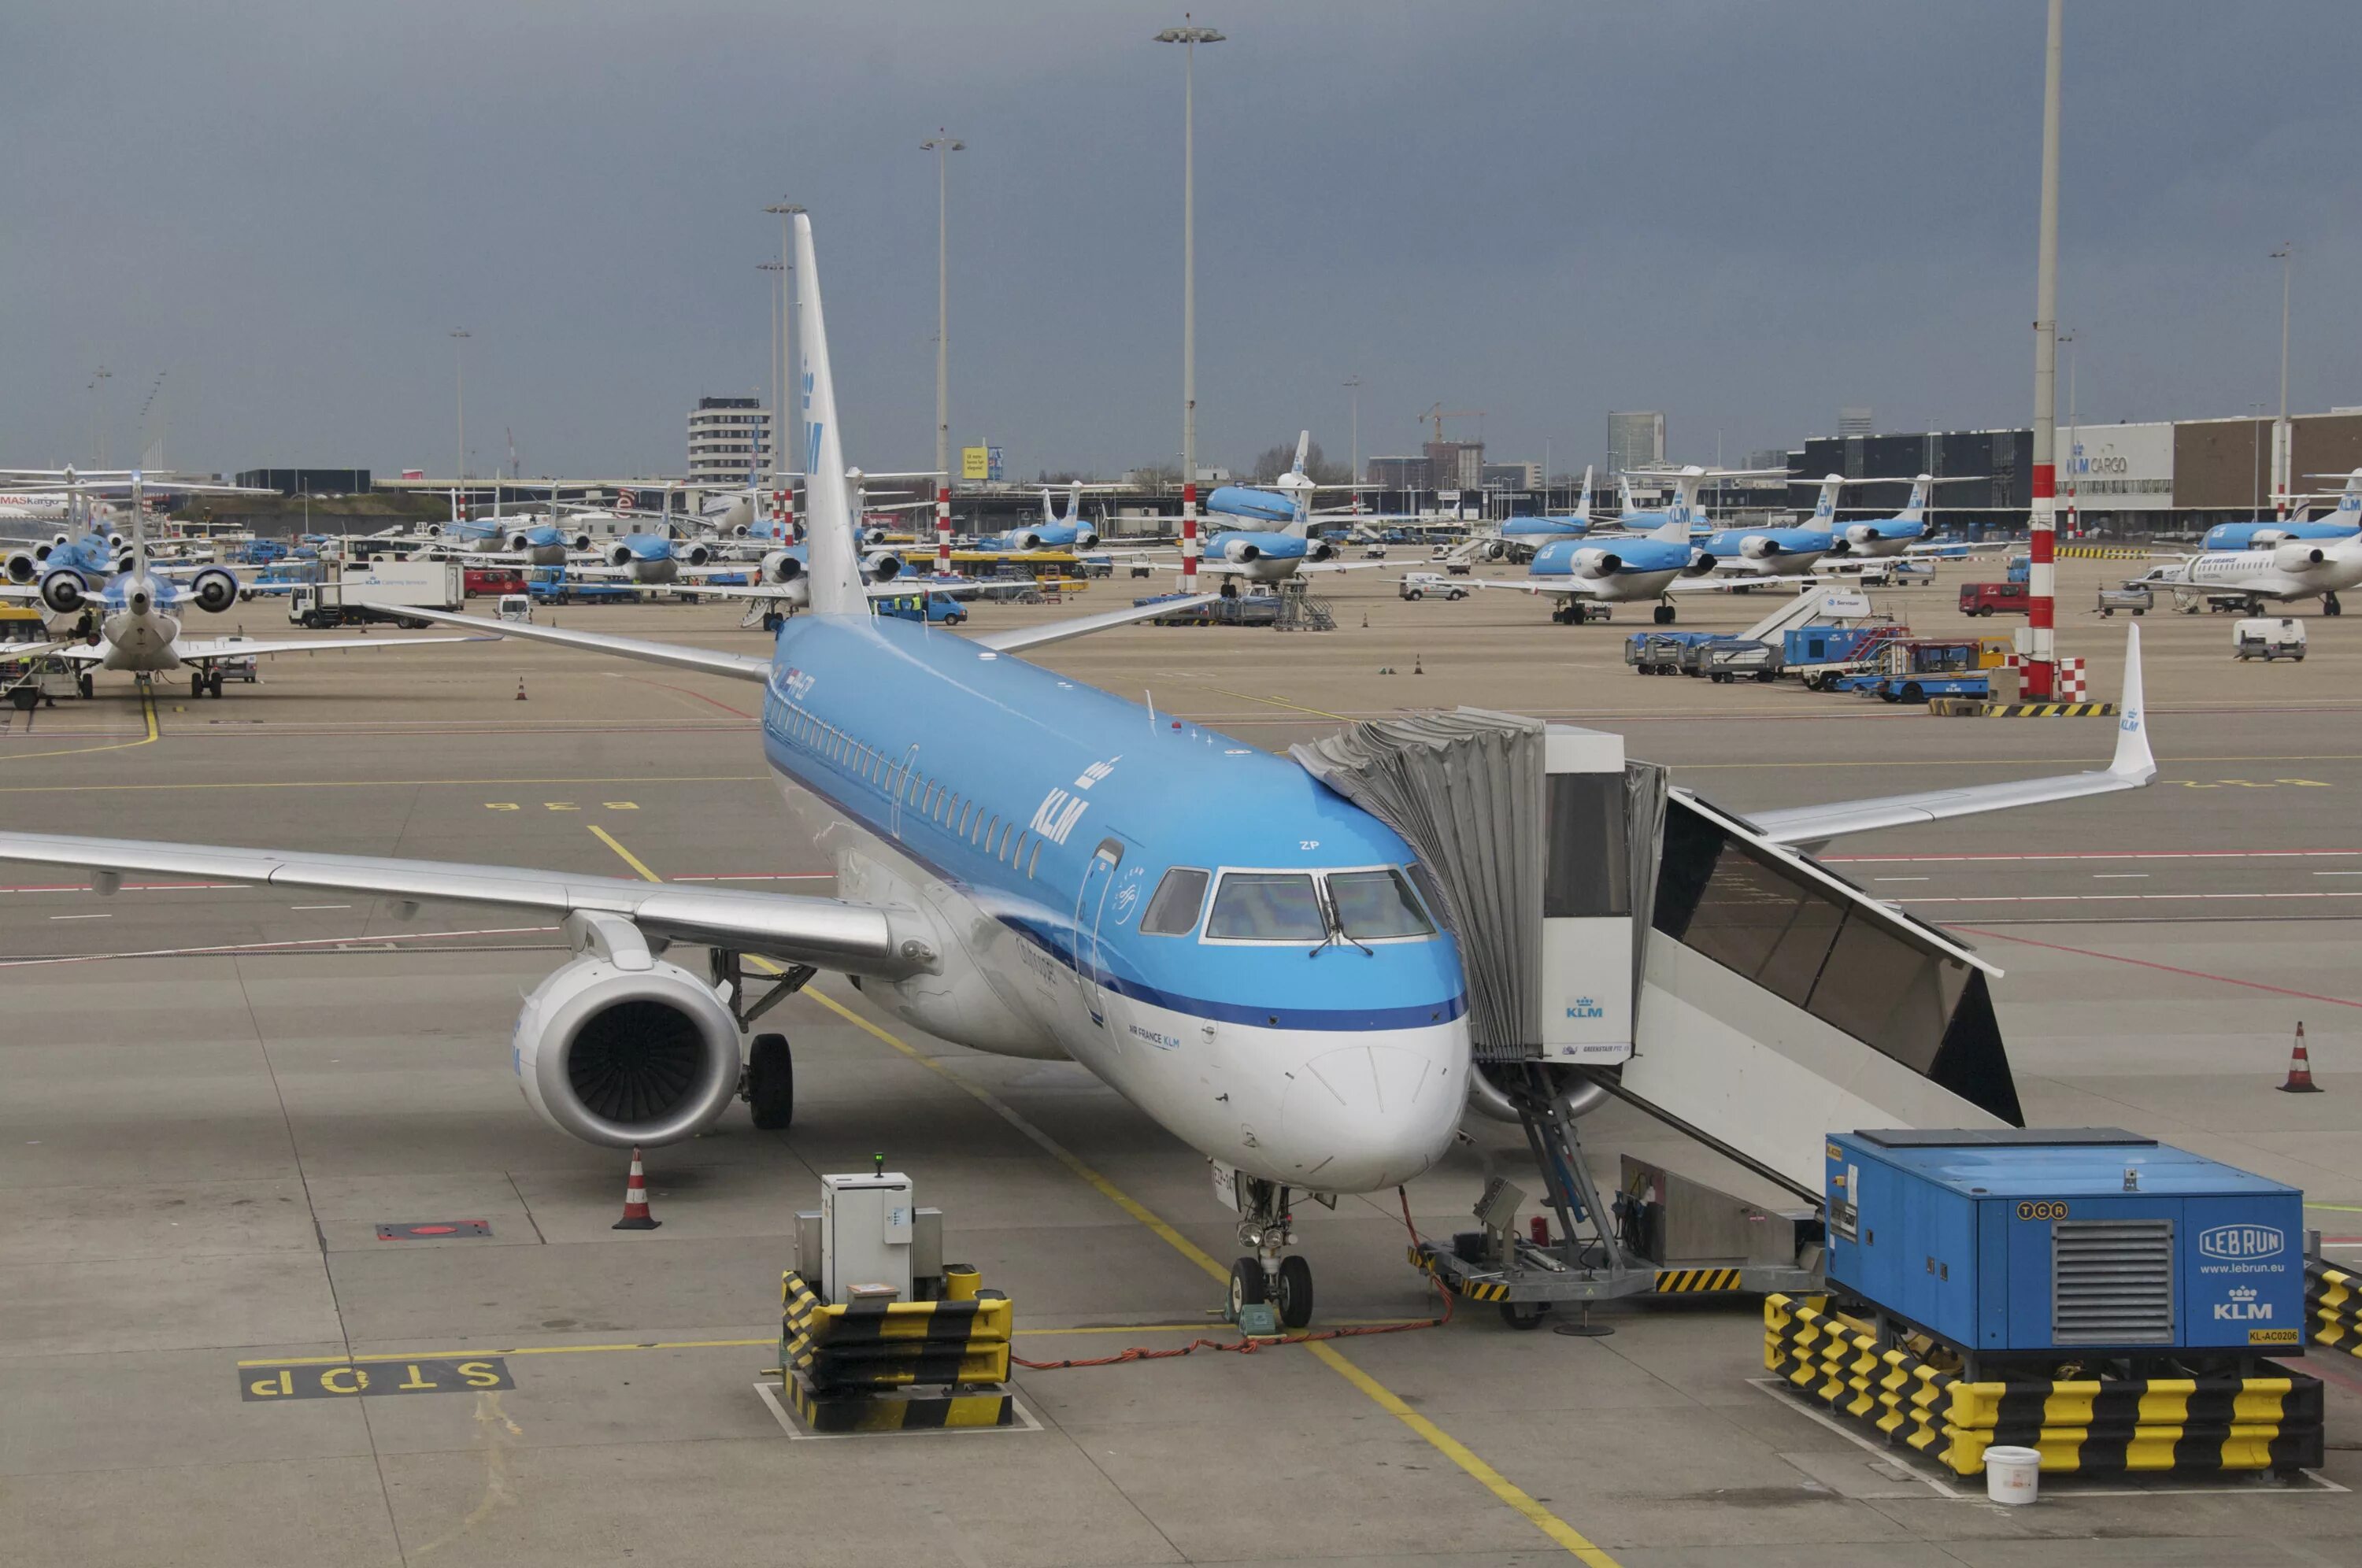 Embraer 190. Brussels Airport 747. Аэропорт Схипхол для KLM. KLM Cityhopper.